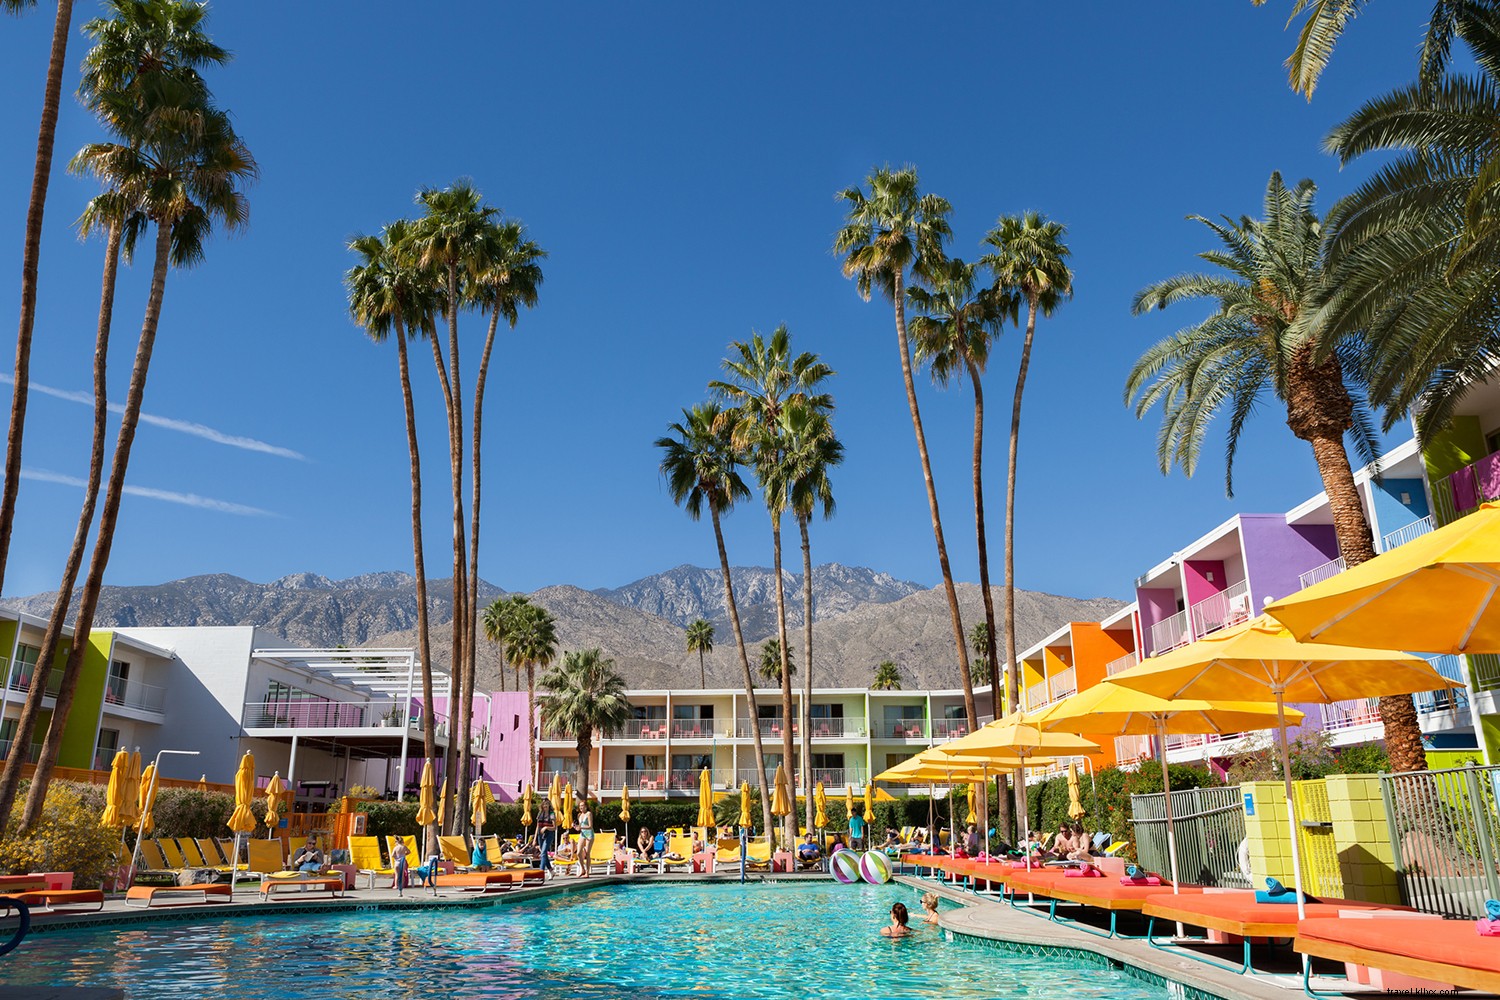 Regístrese y relájese:verano en Greater Palm Springs 